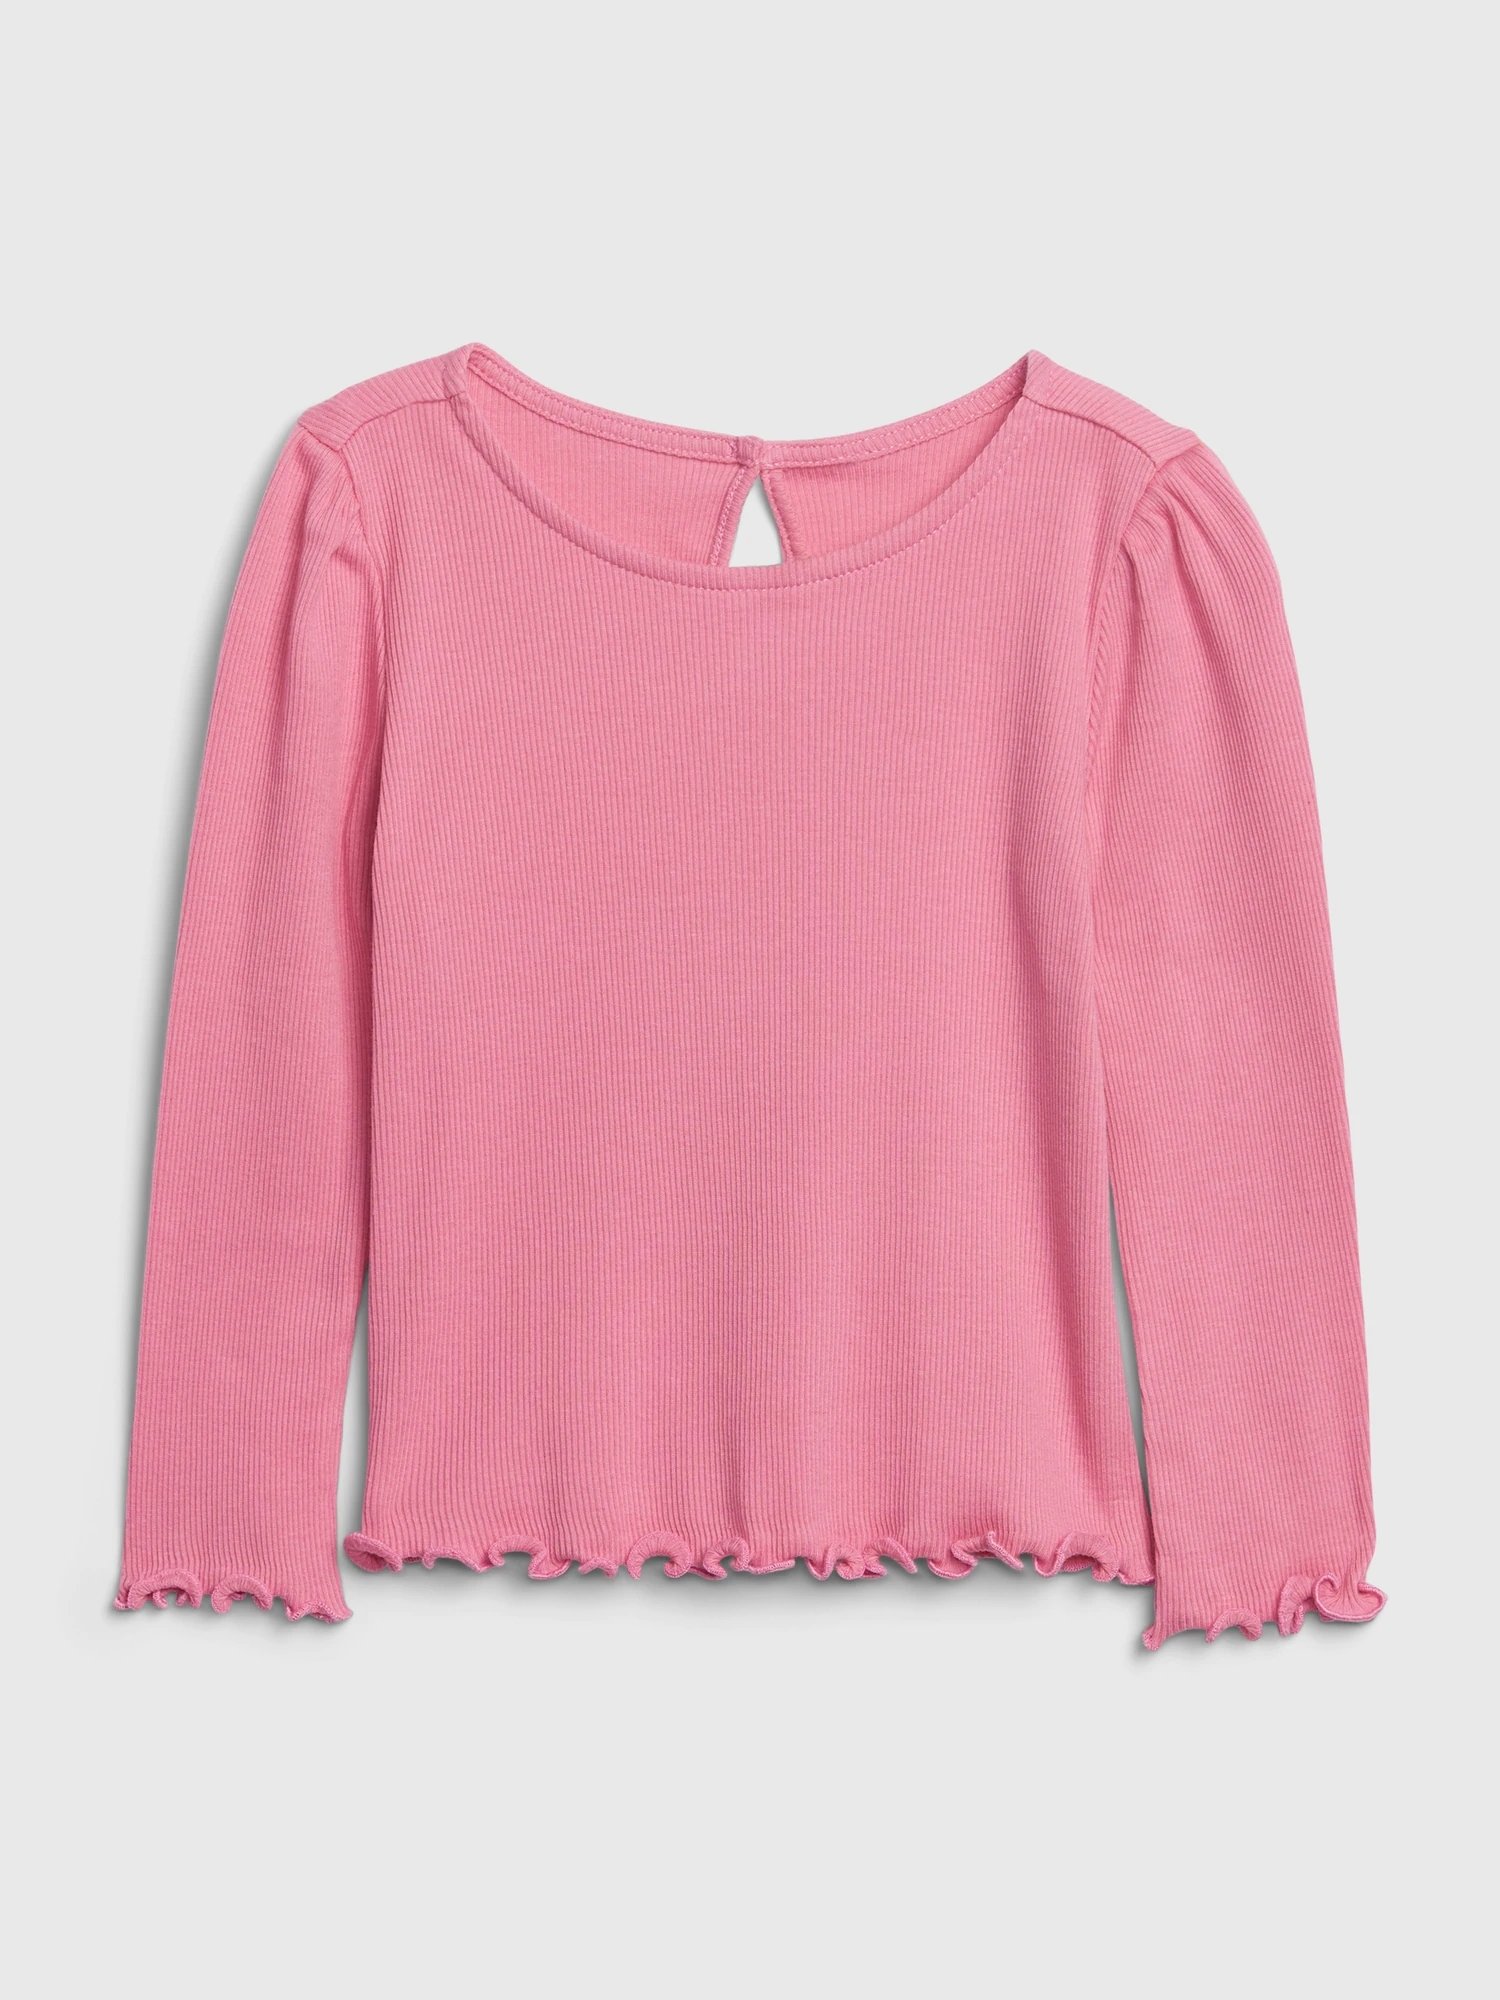 Růžové holčičí tričko GAP